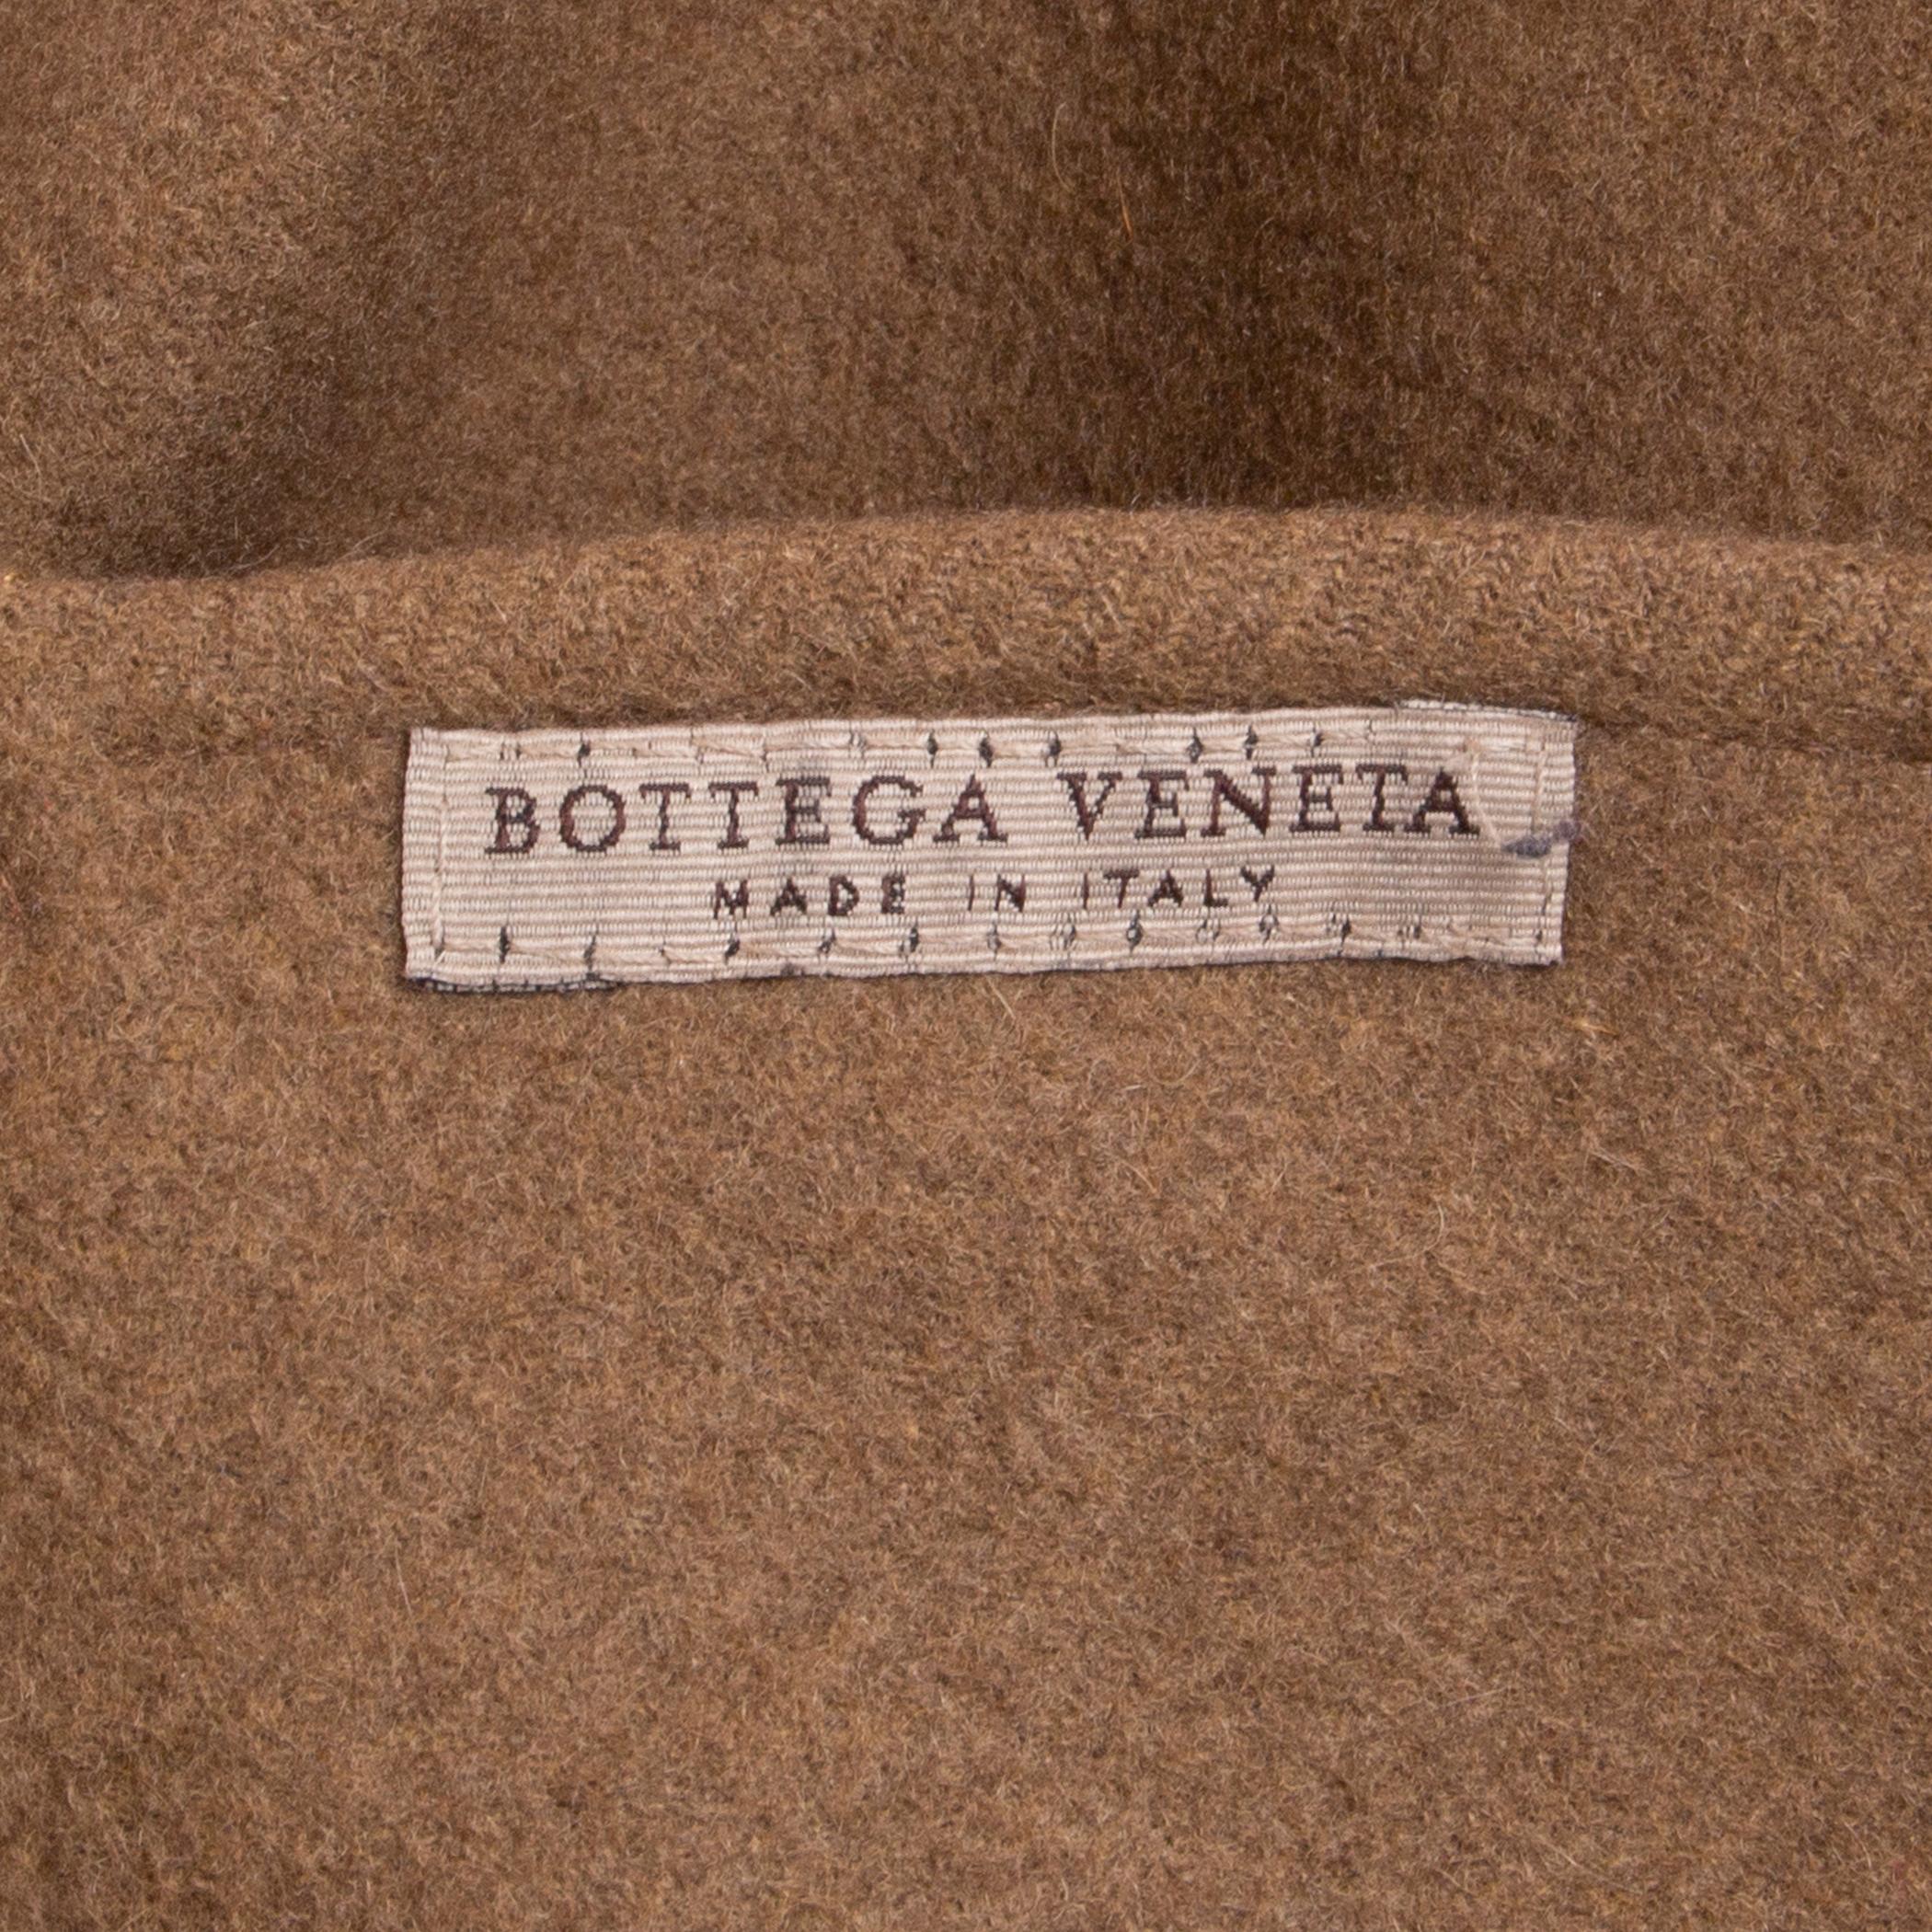 BOTTEGA VENETA olive drab brown cashmere OVERSIZE Coat Jacket 38 XS 1